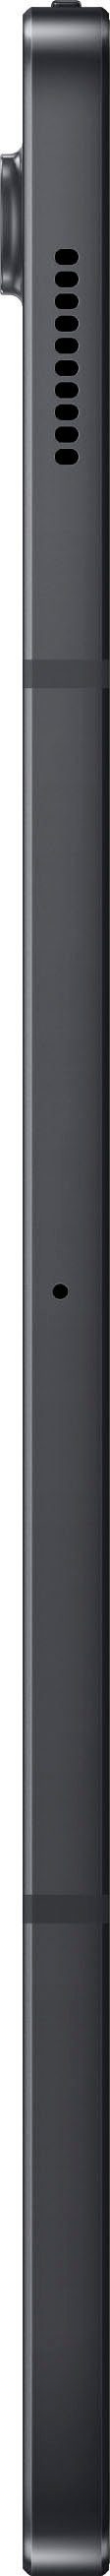 Samsung Galaxy Tab Tablet Mystic 5G) S7 LTE FE Black GB, Android, (12,4", 64